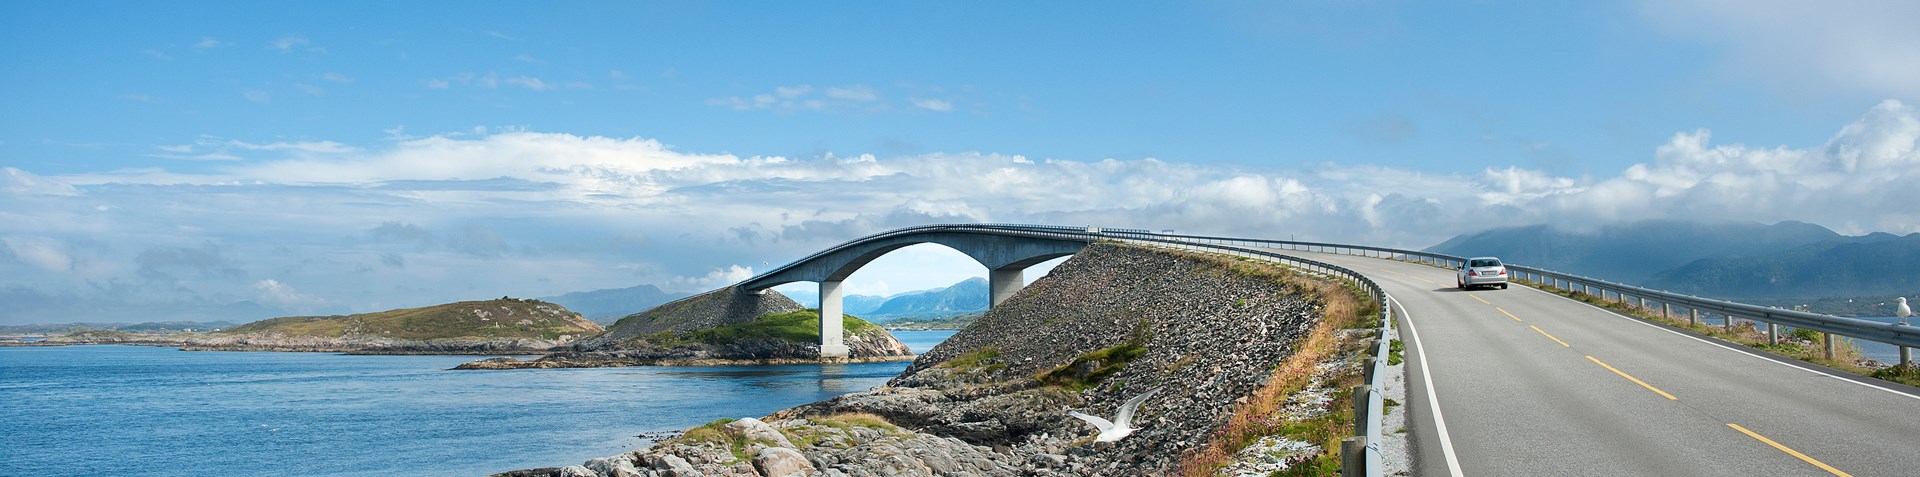 Picture from Scenic Route Hardanger. Photo: Frid-Jorunn Stabell